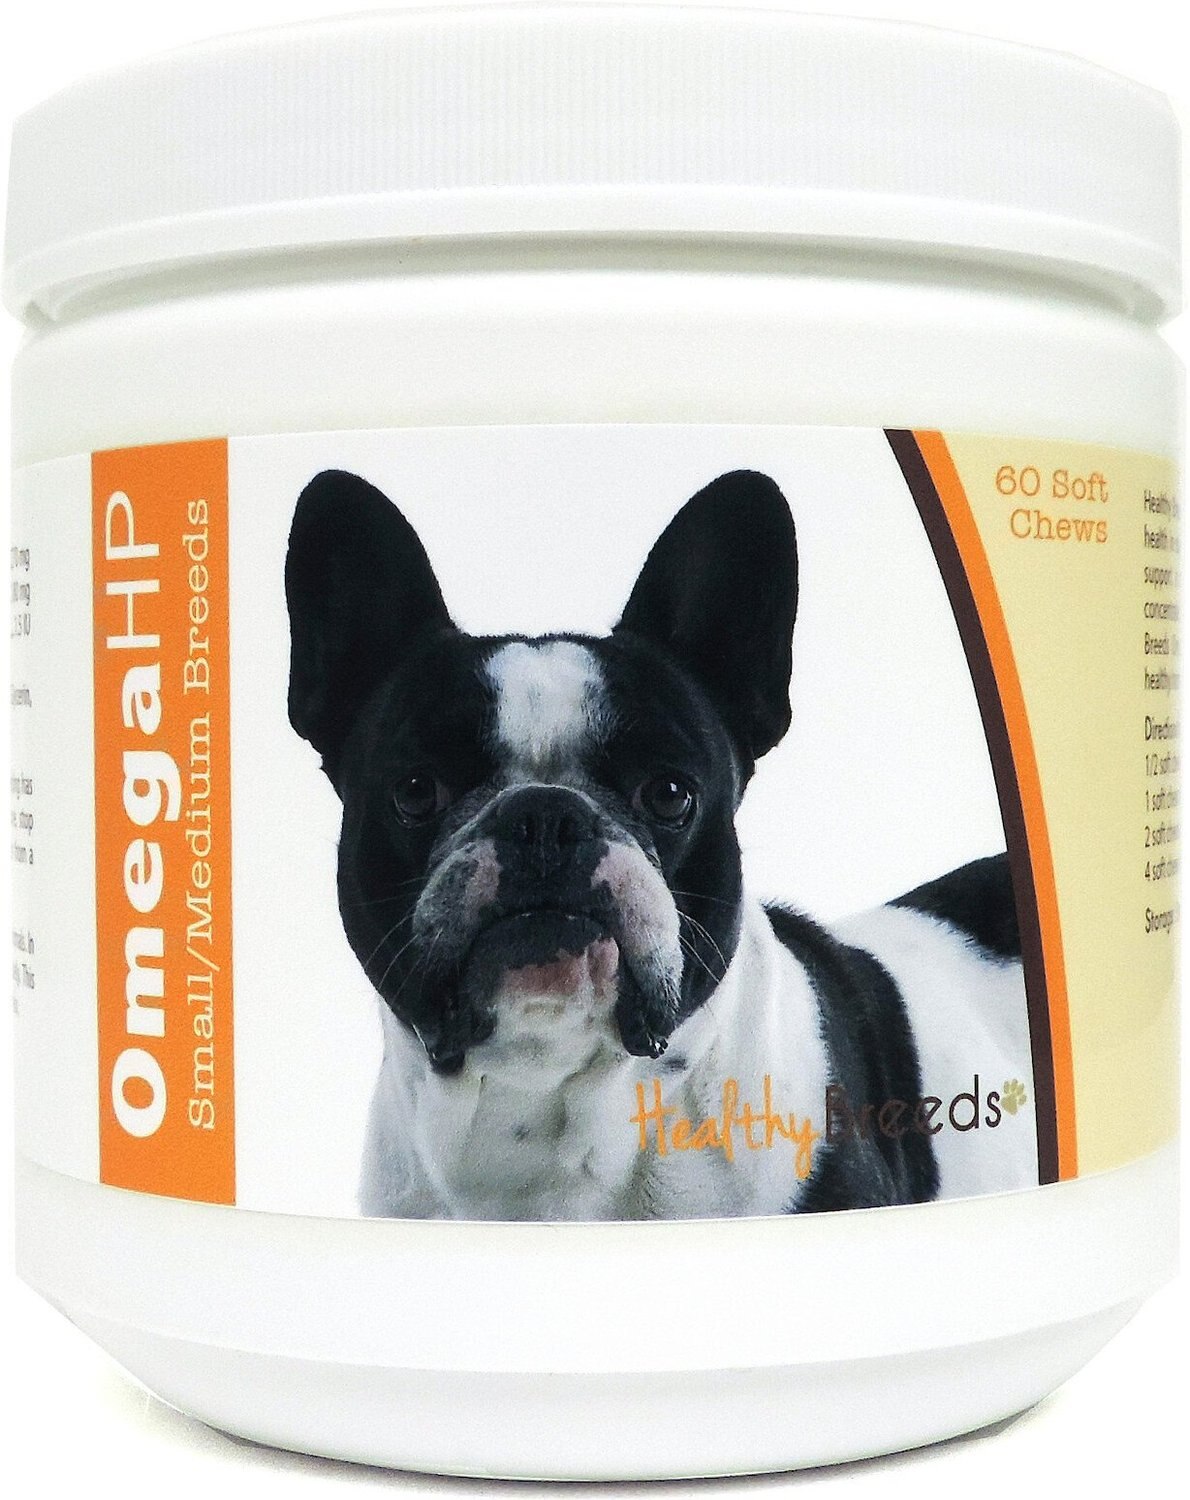 HEALTHY BREEDS French Bulldog Omega HP Soft Chews Dog